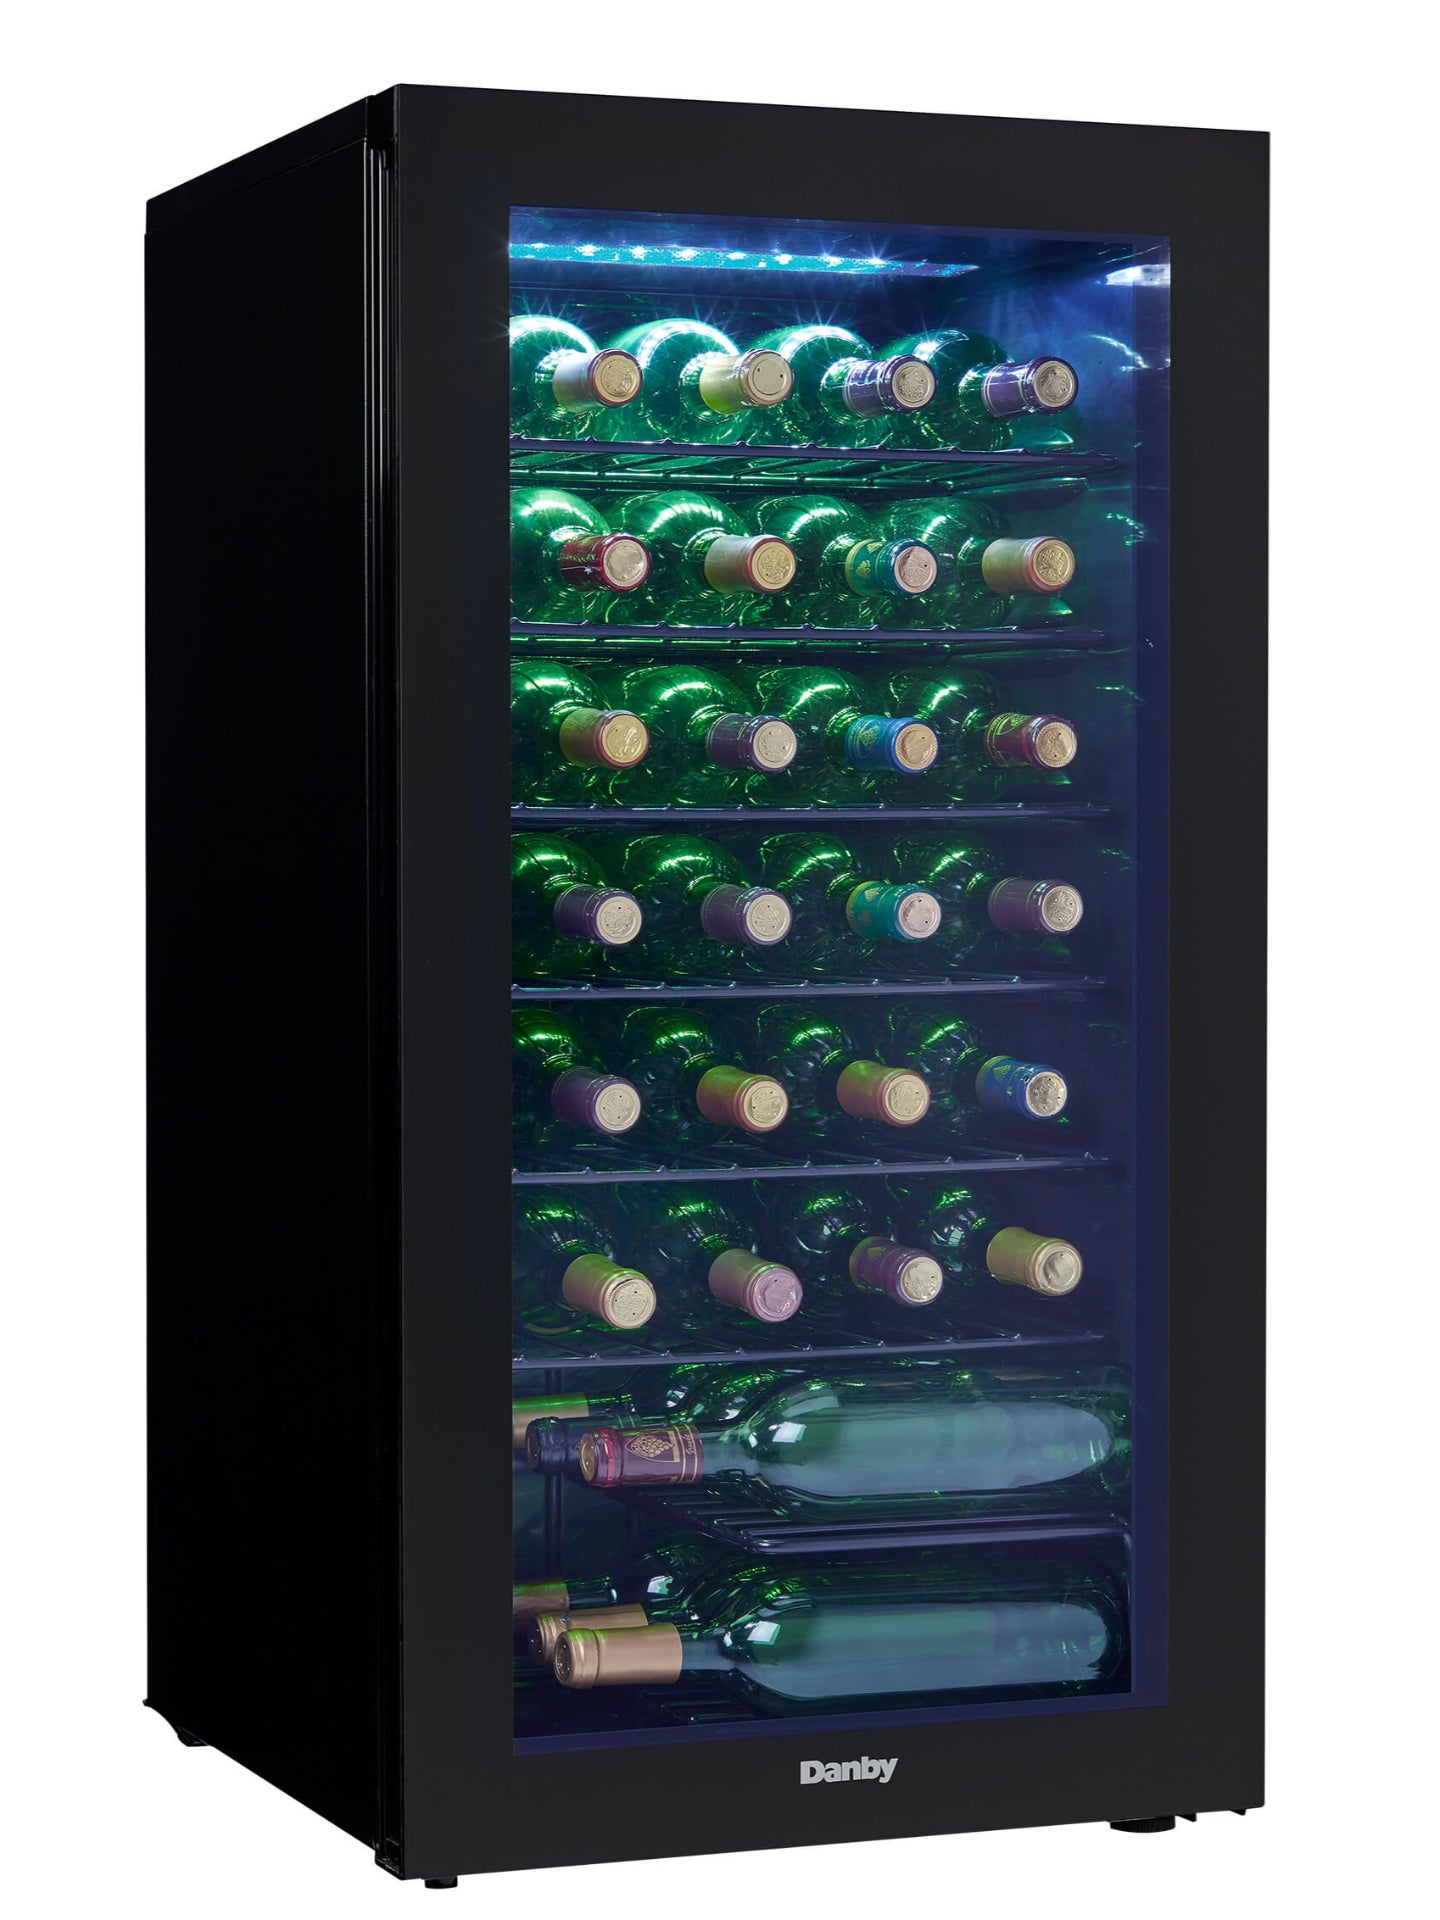 Danby 36 Bottle Free-Standing Wine Cooler in Black - DWC036A2BDB-6